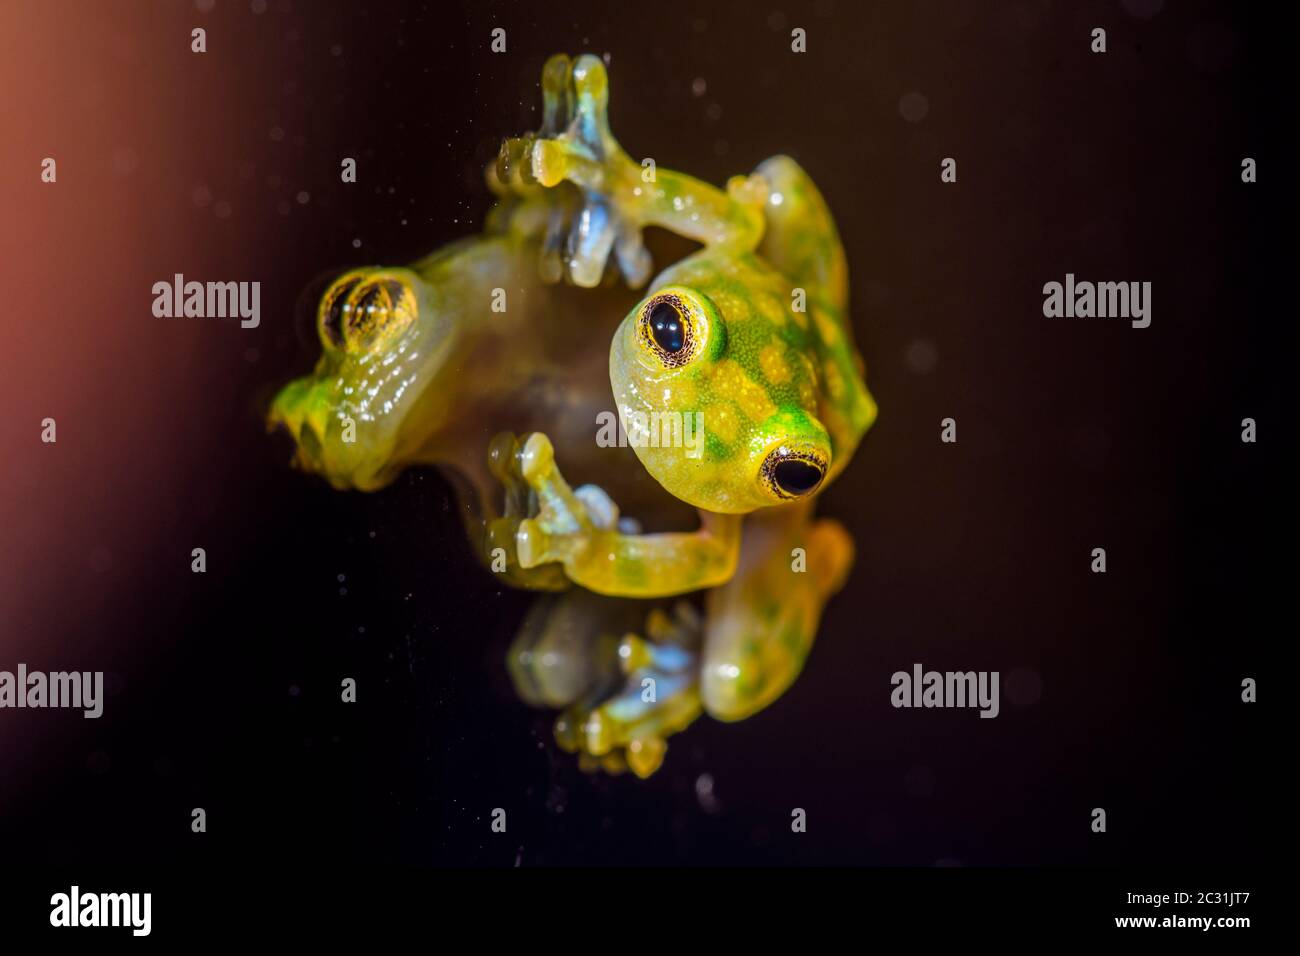 Glass frog - Wikipedia